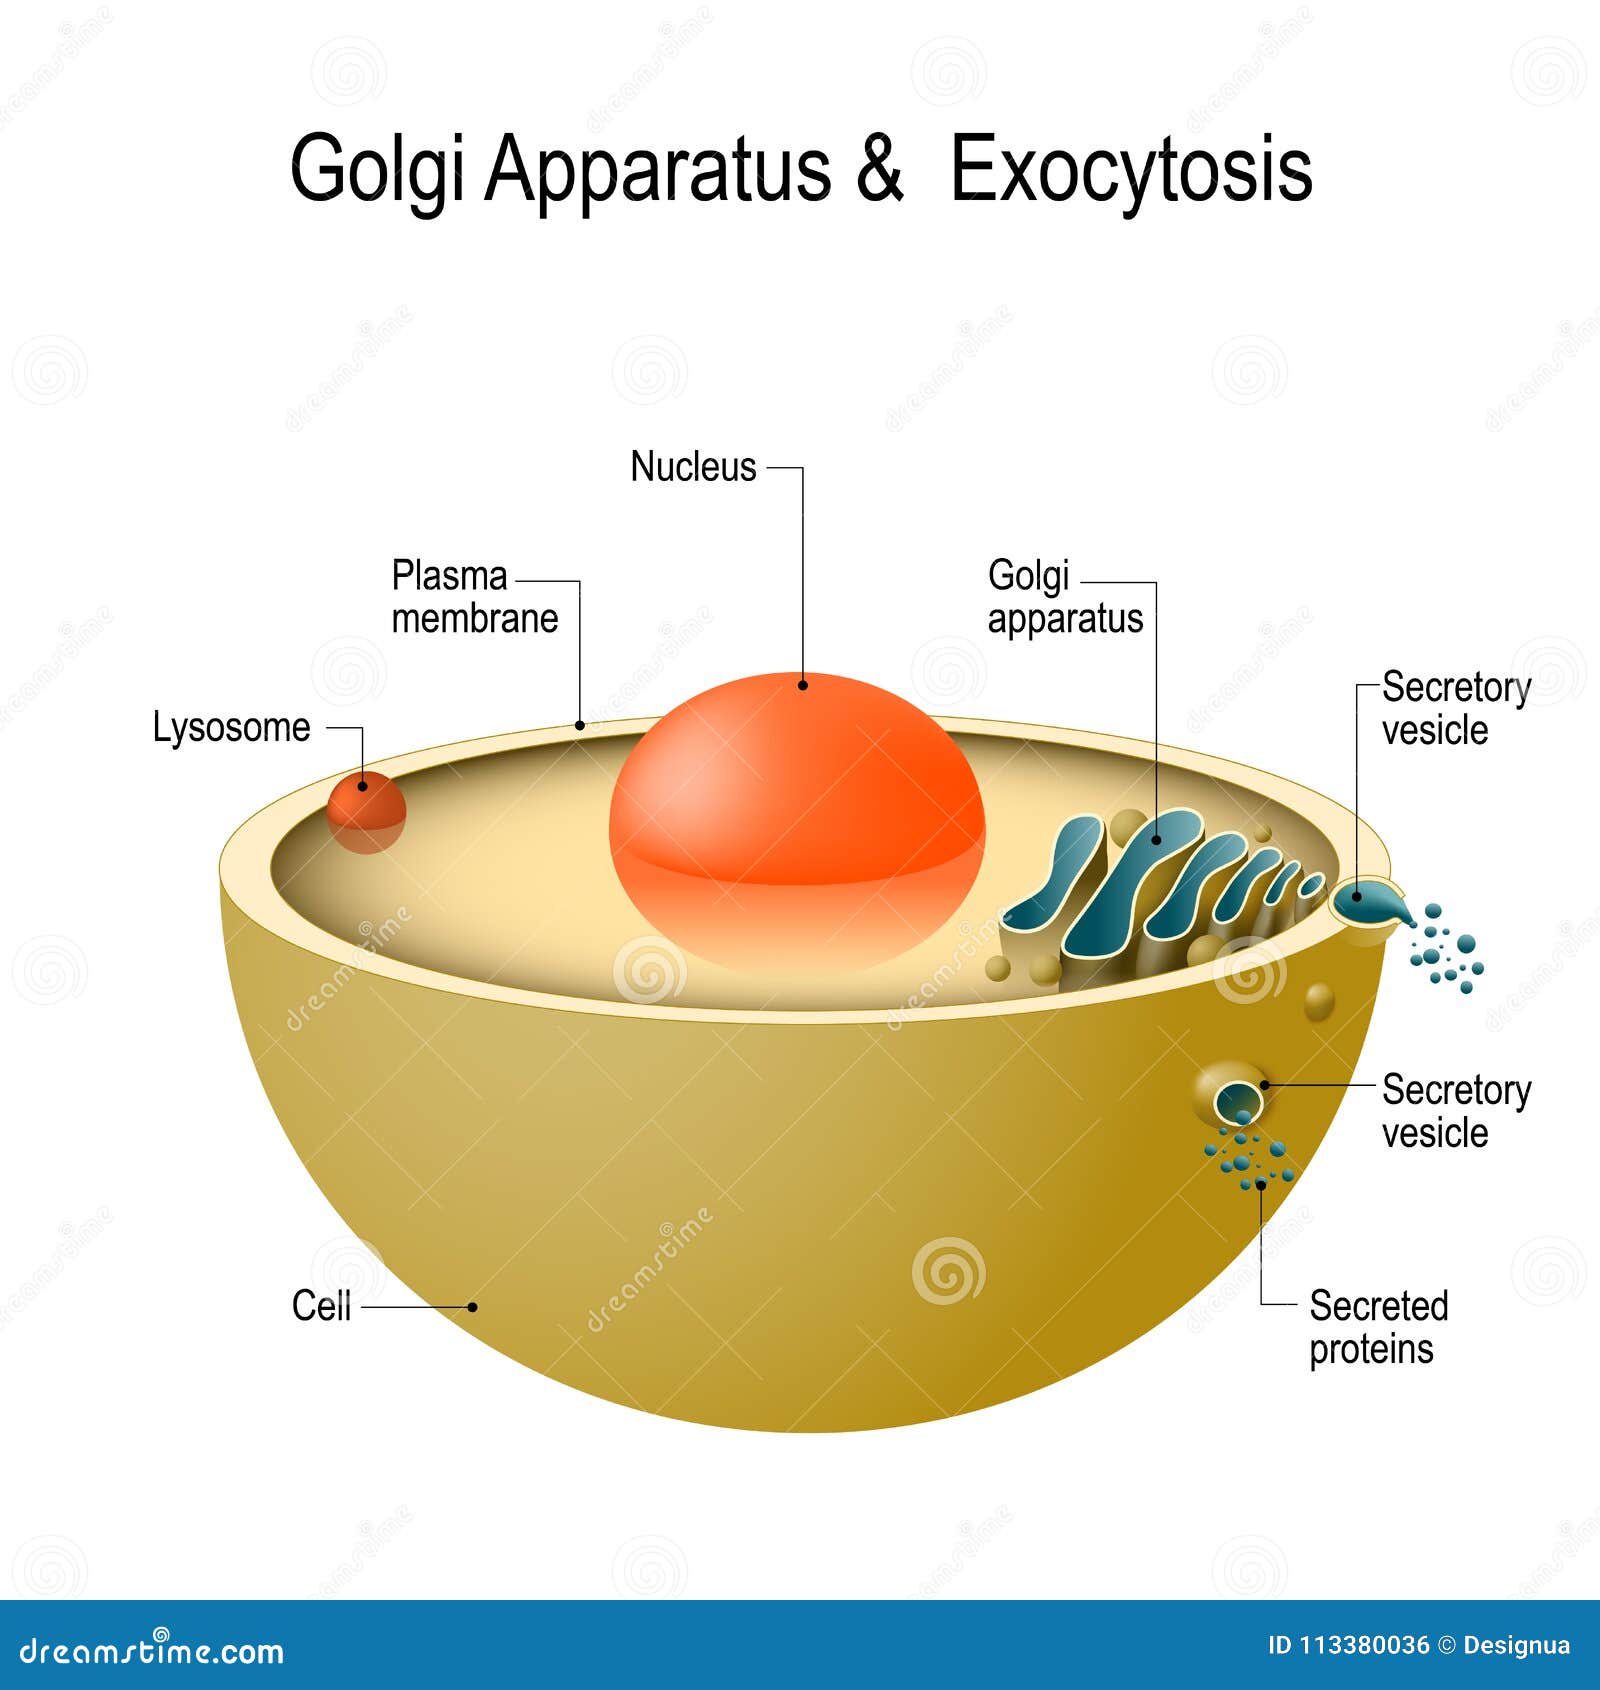 golgi apparatus and exocytosis